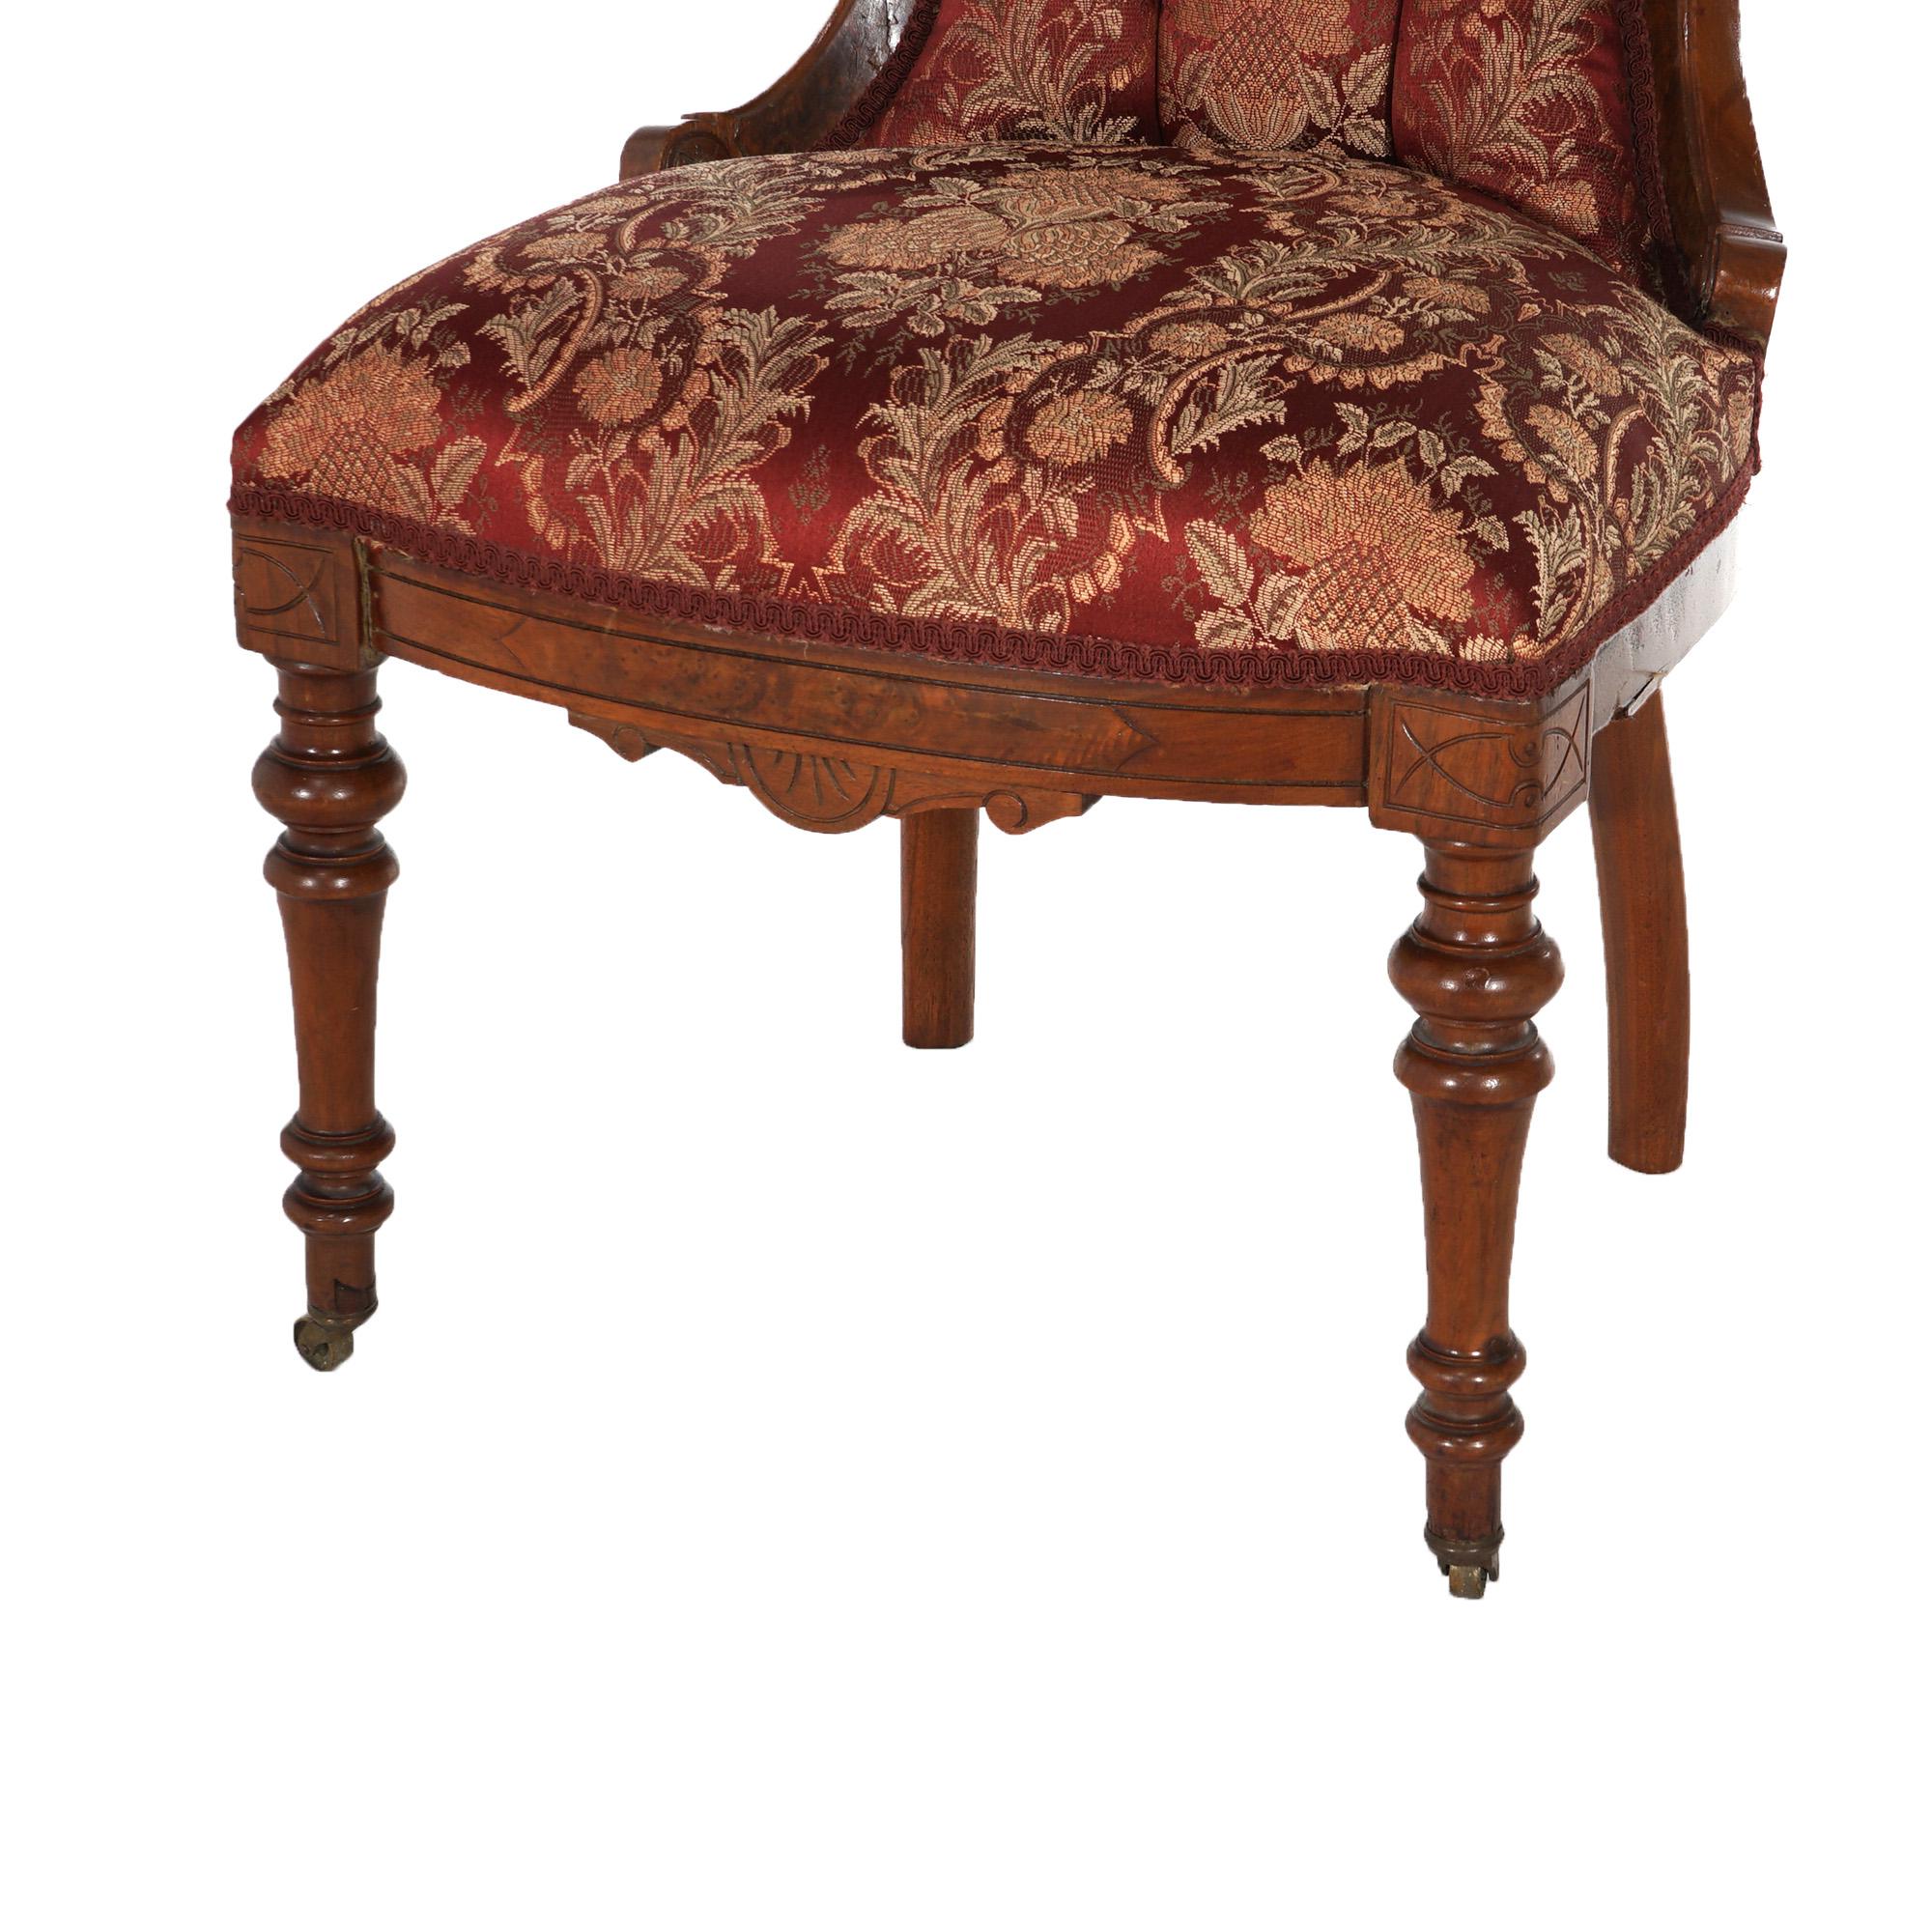 Upholstery Antique John Jelliff Renaissance Revival Carved Walnut Side Chair C1880 For Sale